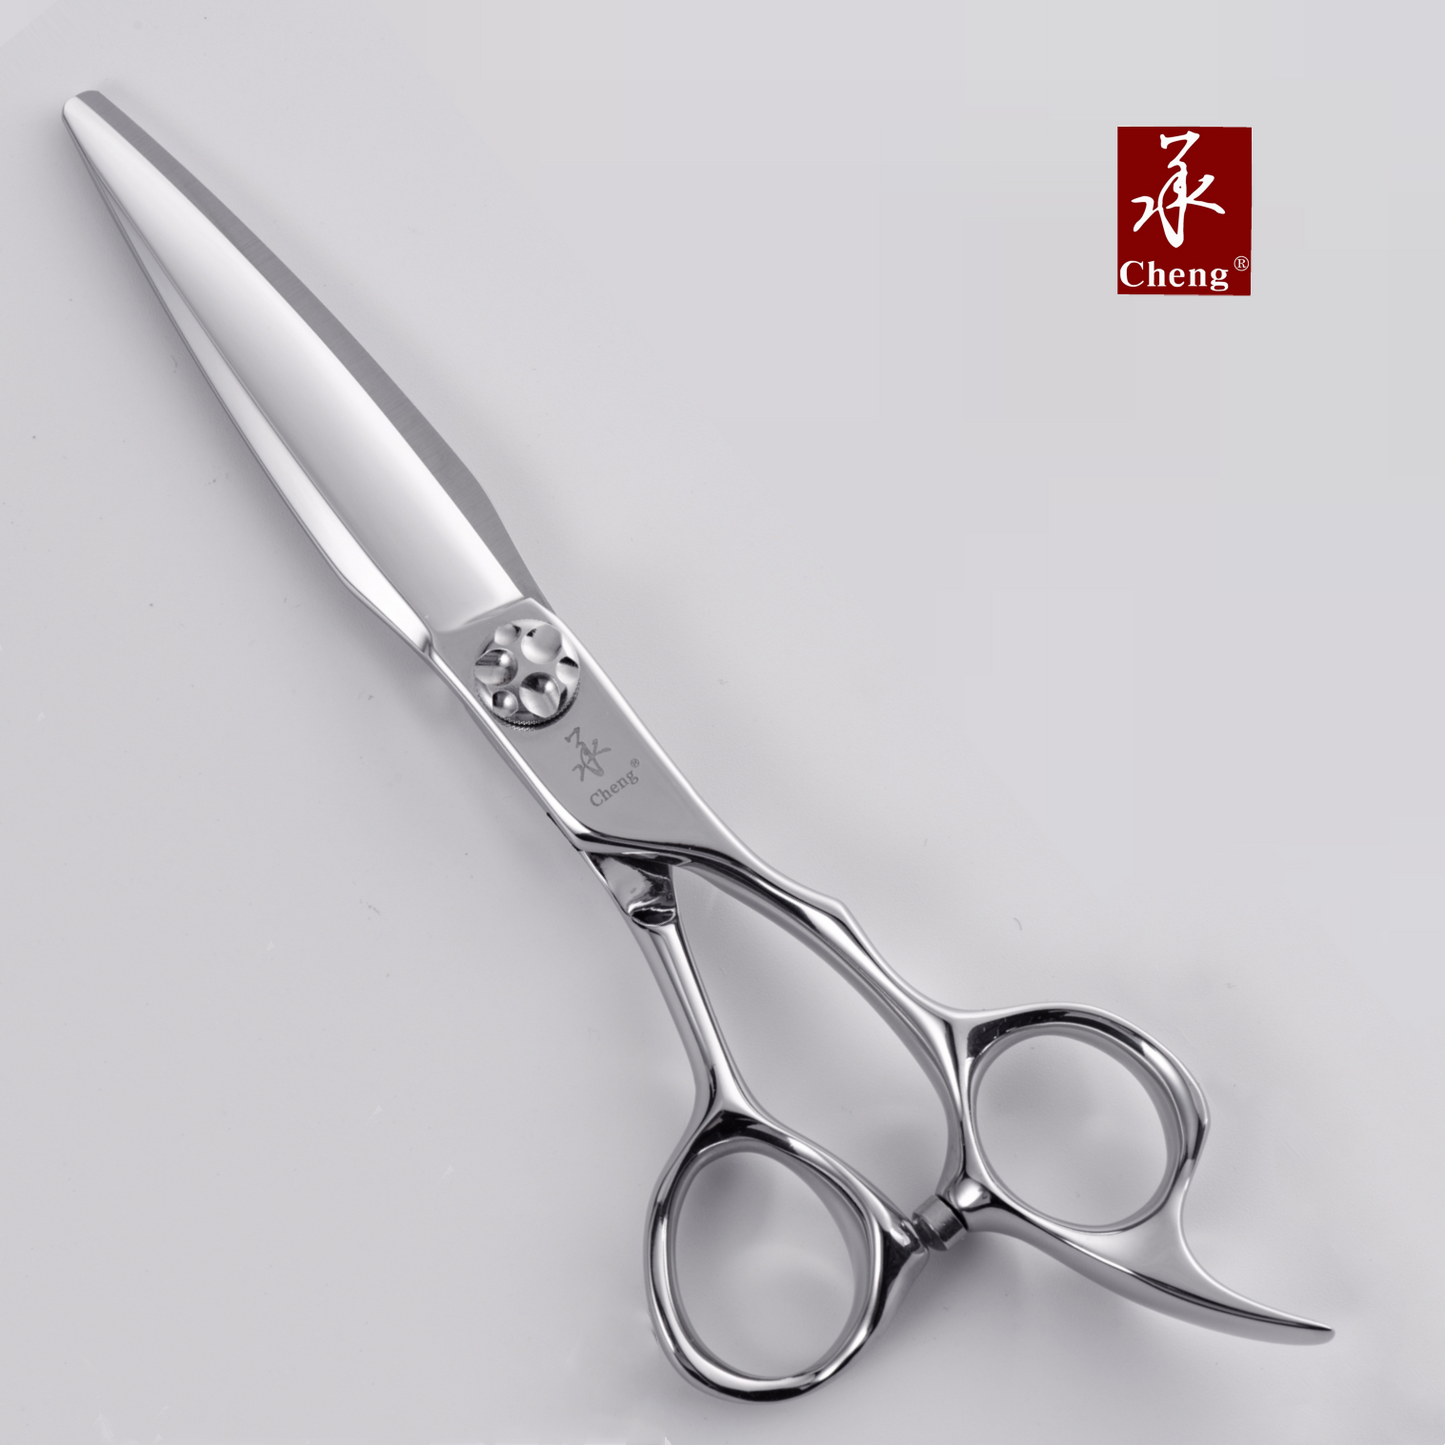 VD-675K Hair Cutting Scissors 6.75 Inch